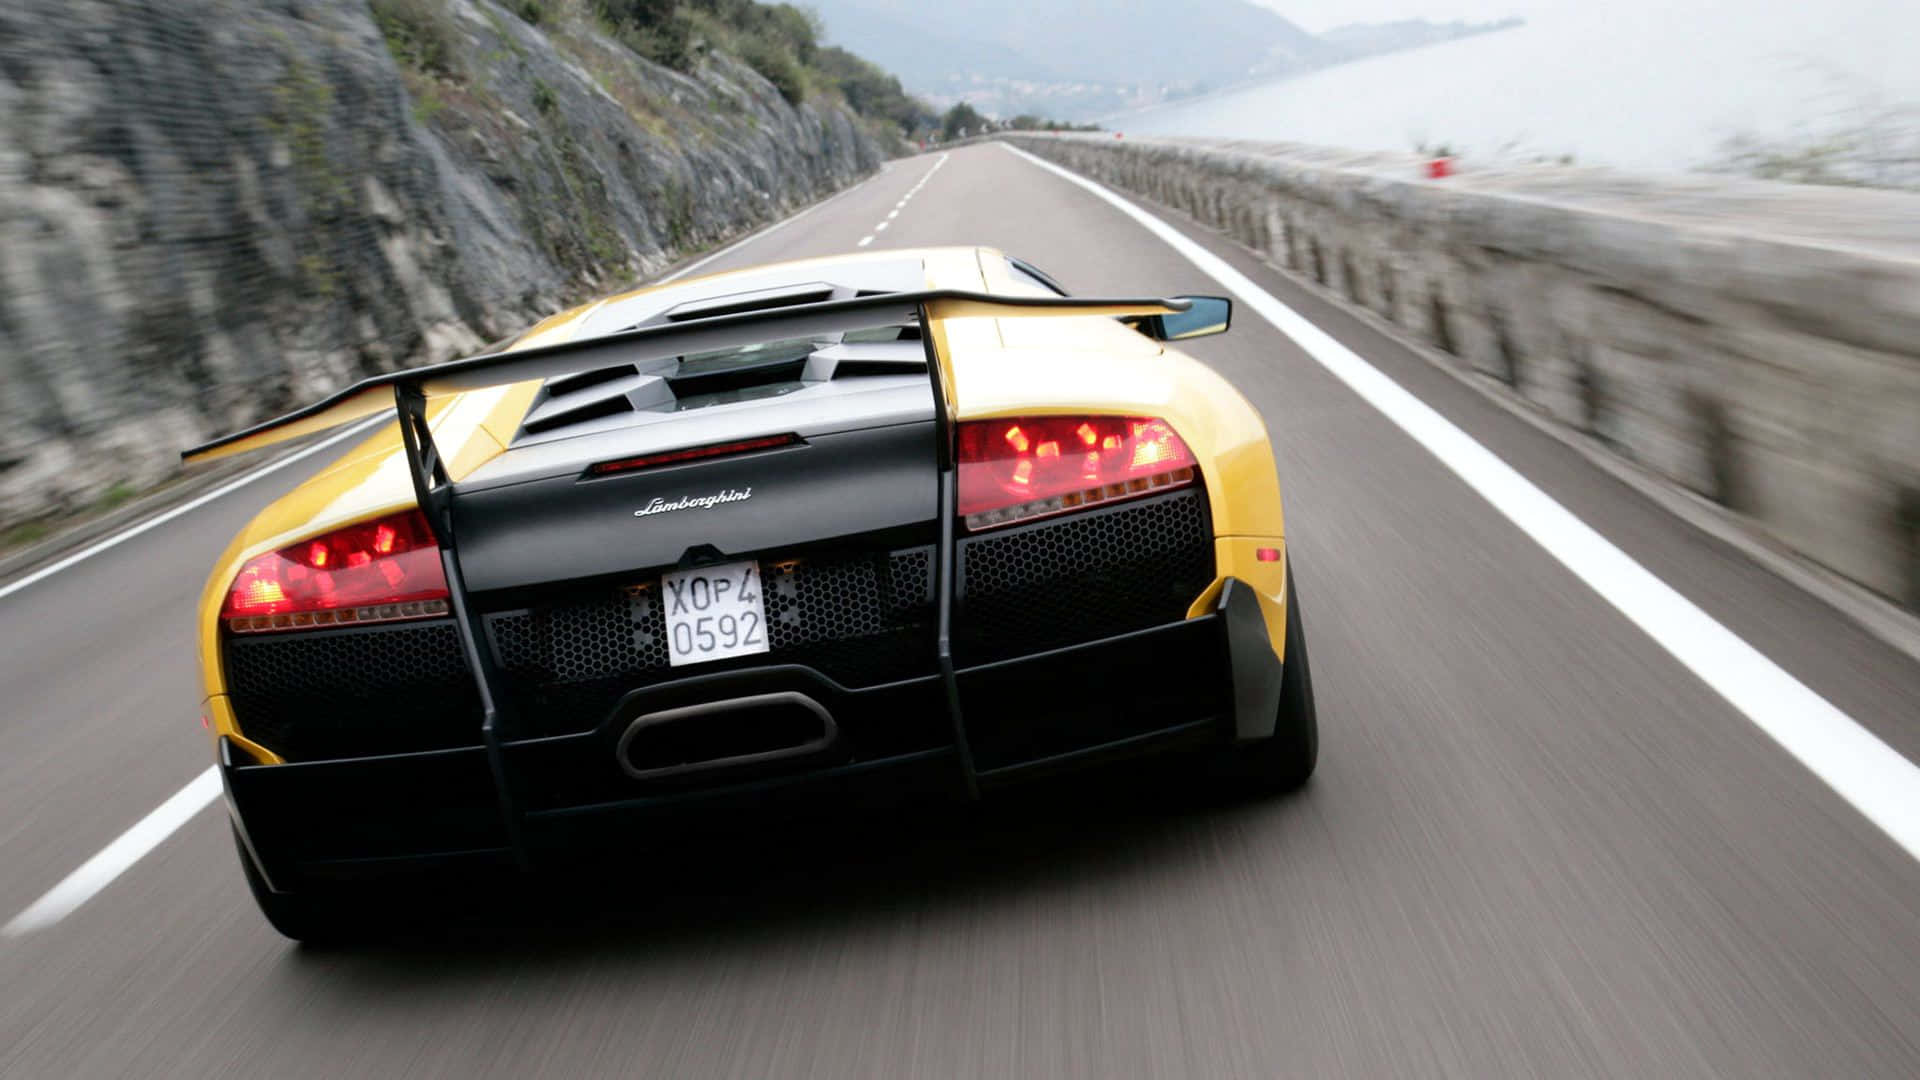 Stunning Lamborghini Murciélago on the Road Wallpaper